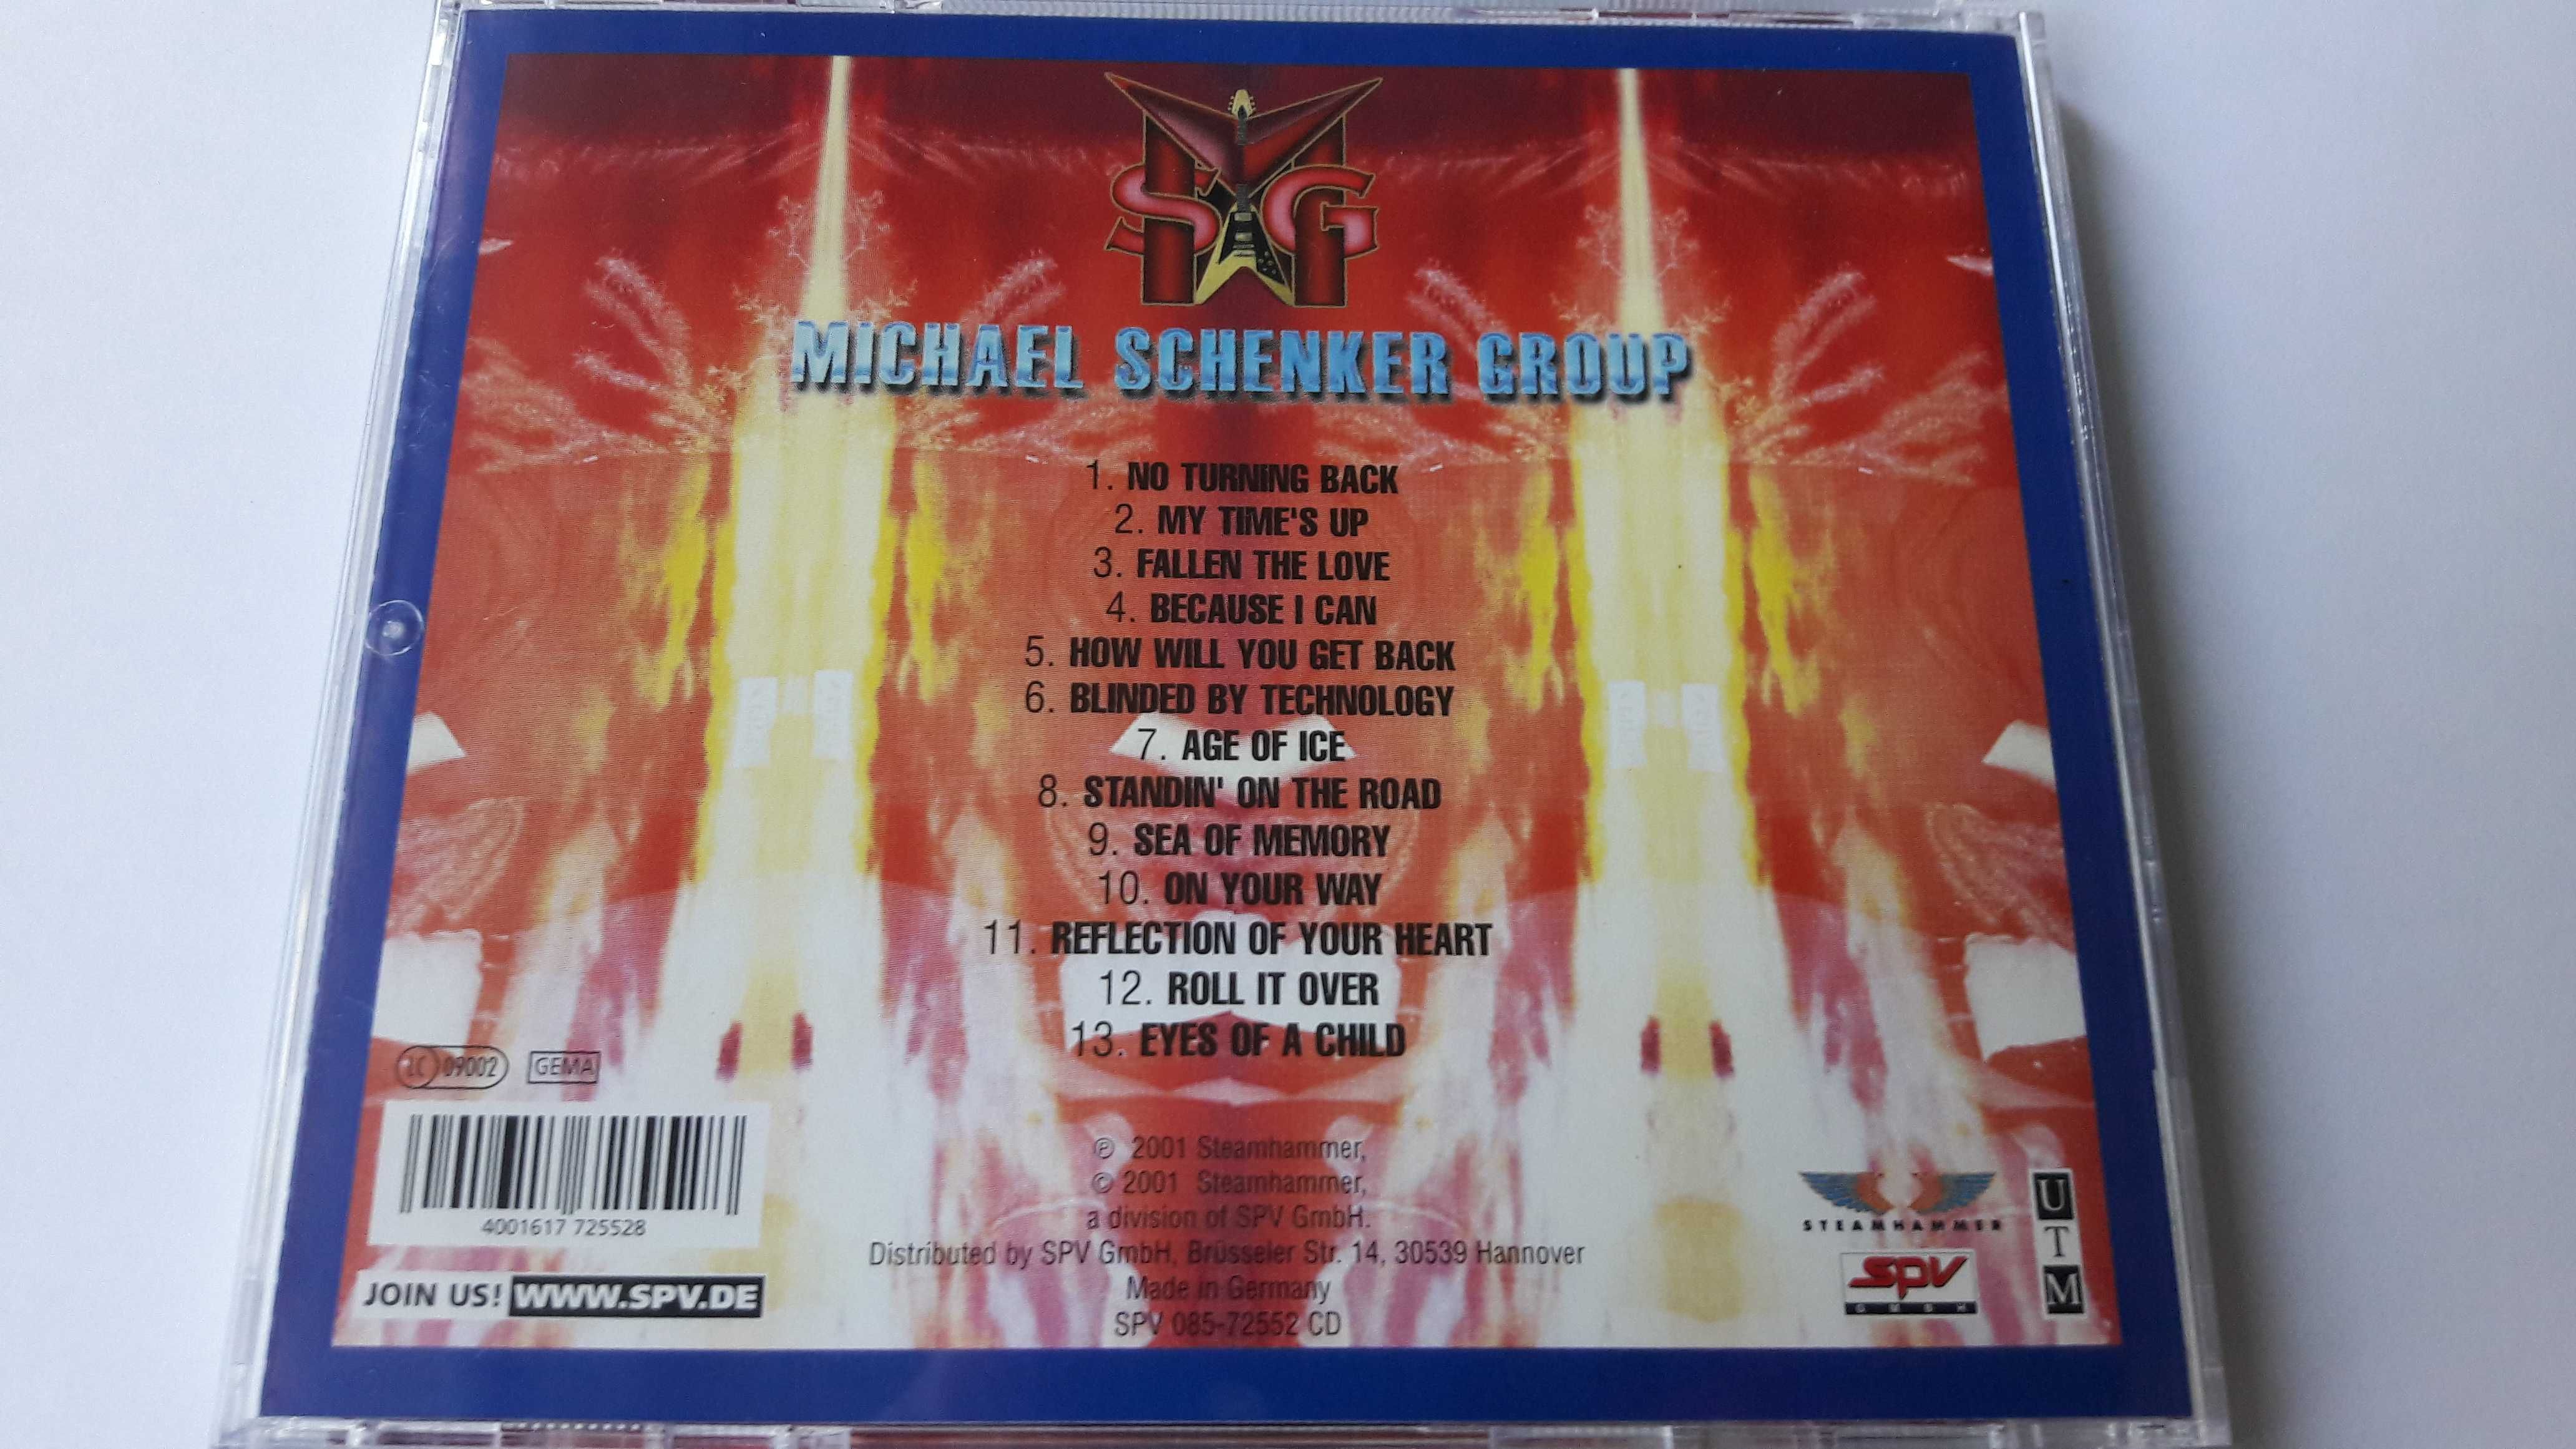 Фирменный диск Michael Schenker Group "Be Aware Of Scorpions" 2001